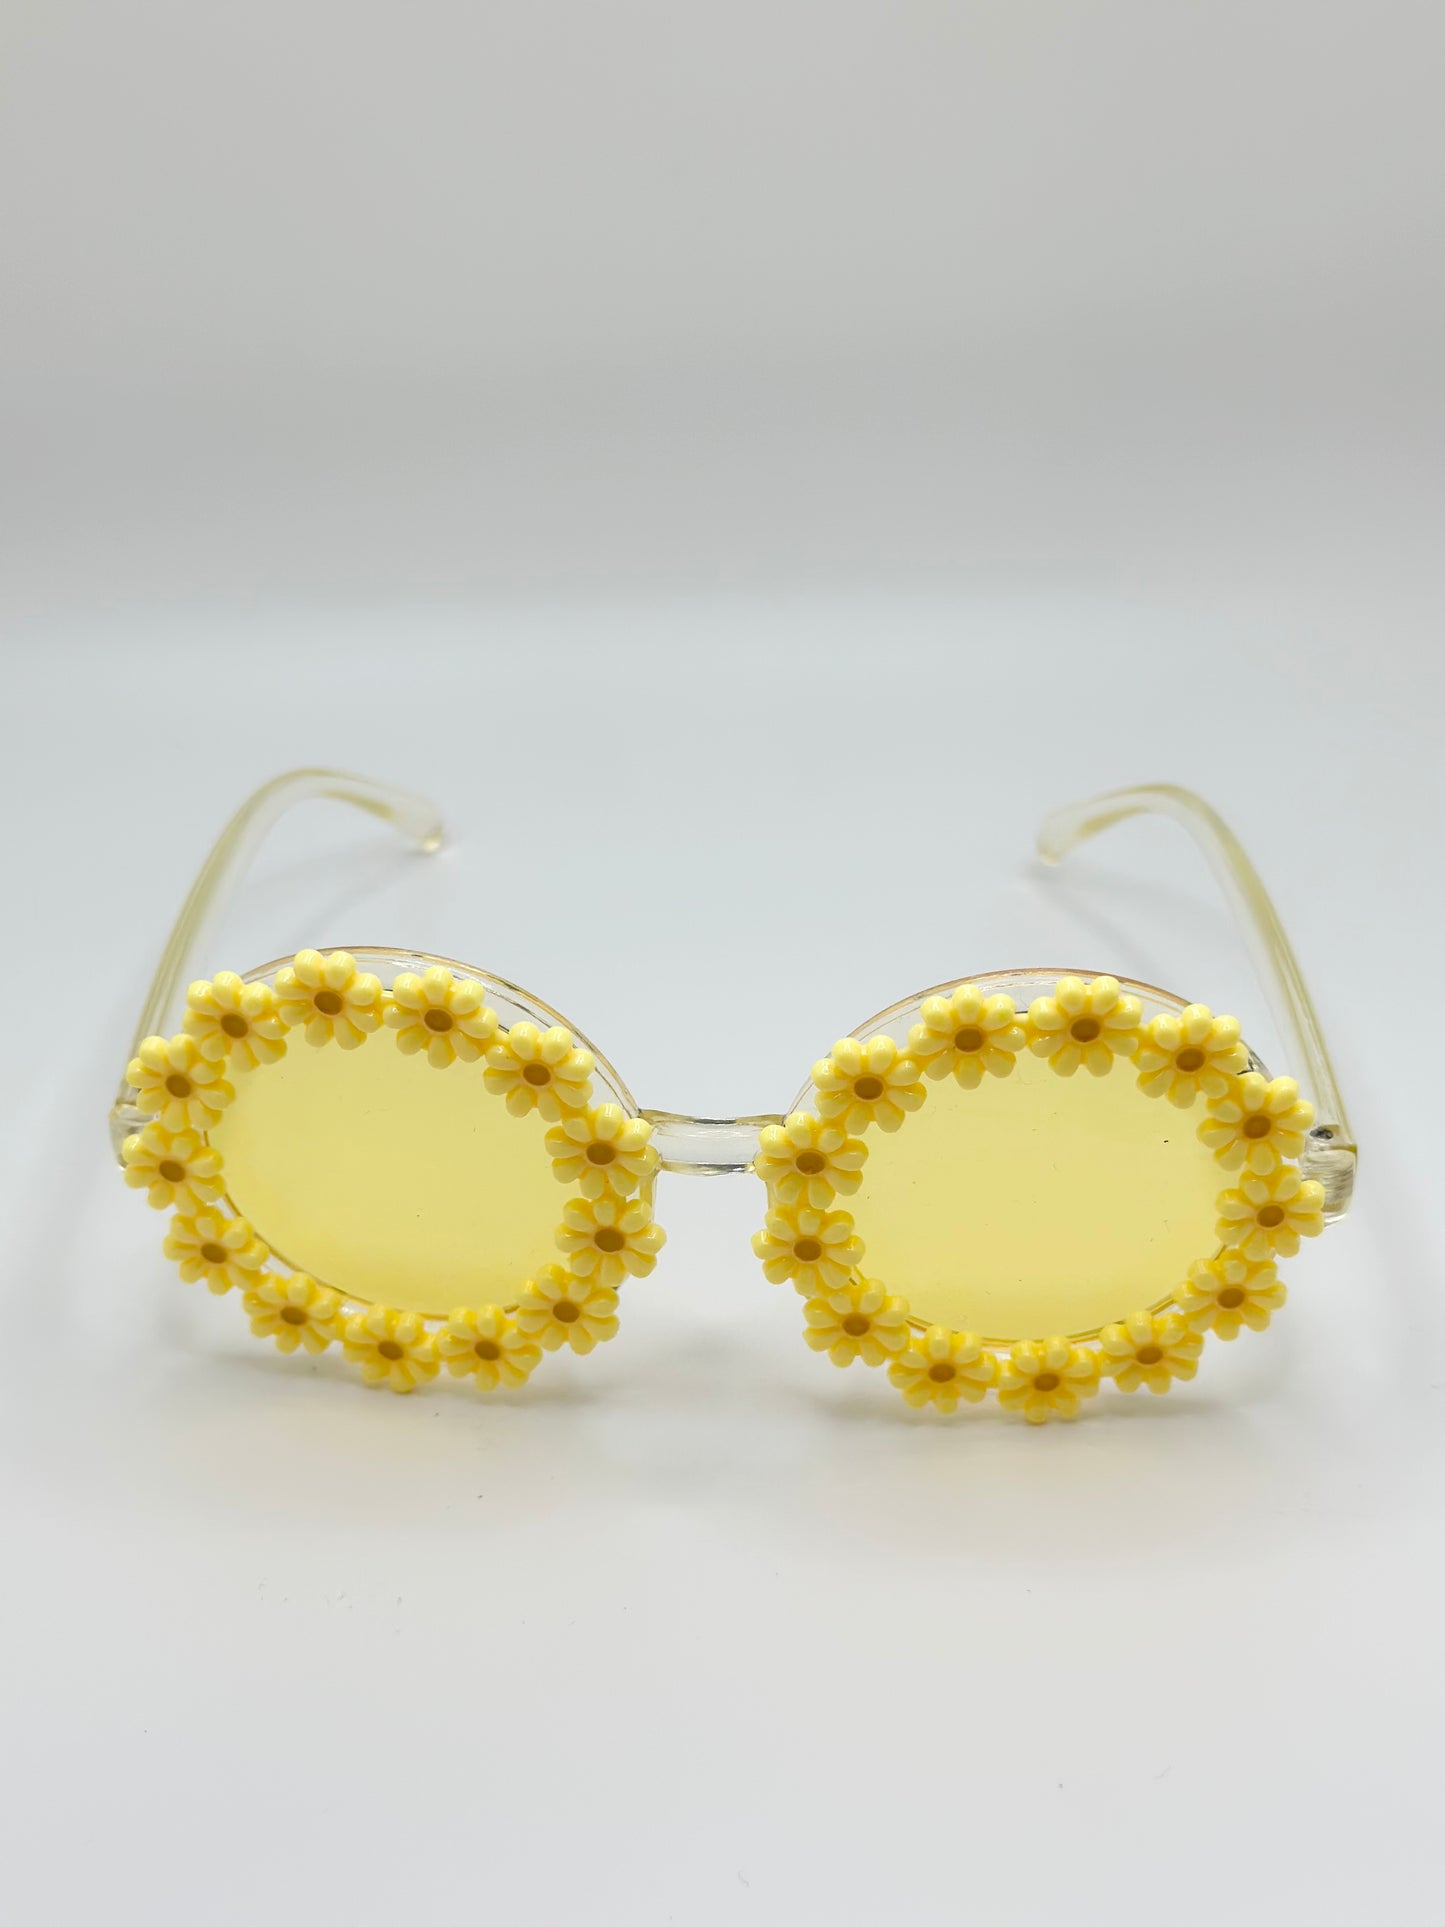 Yellow Daisy Sun Glasses